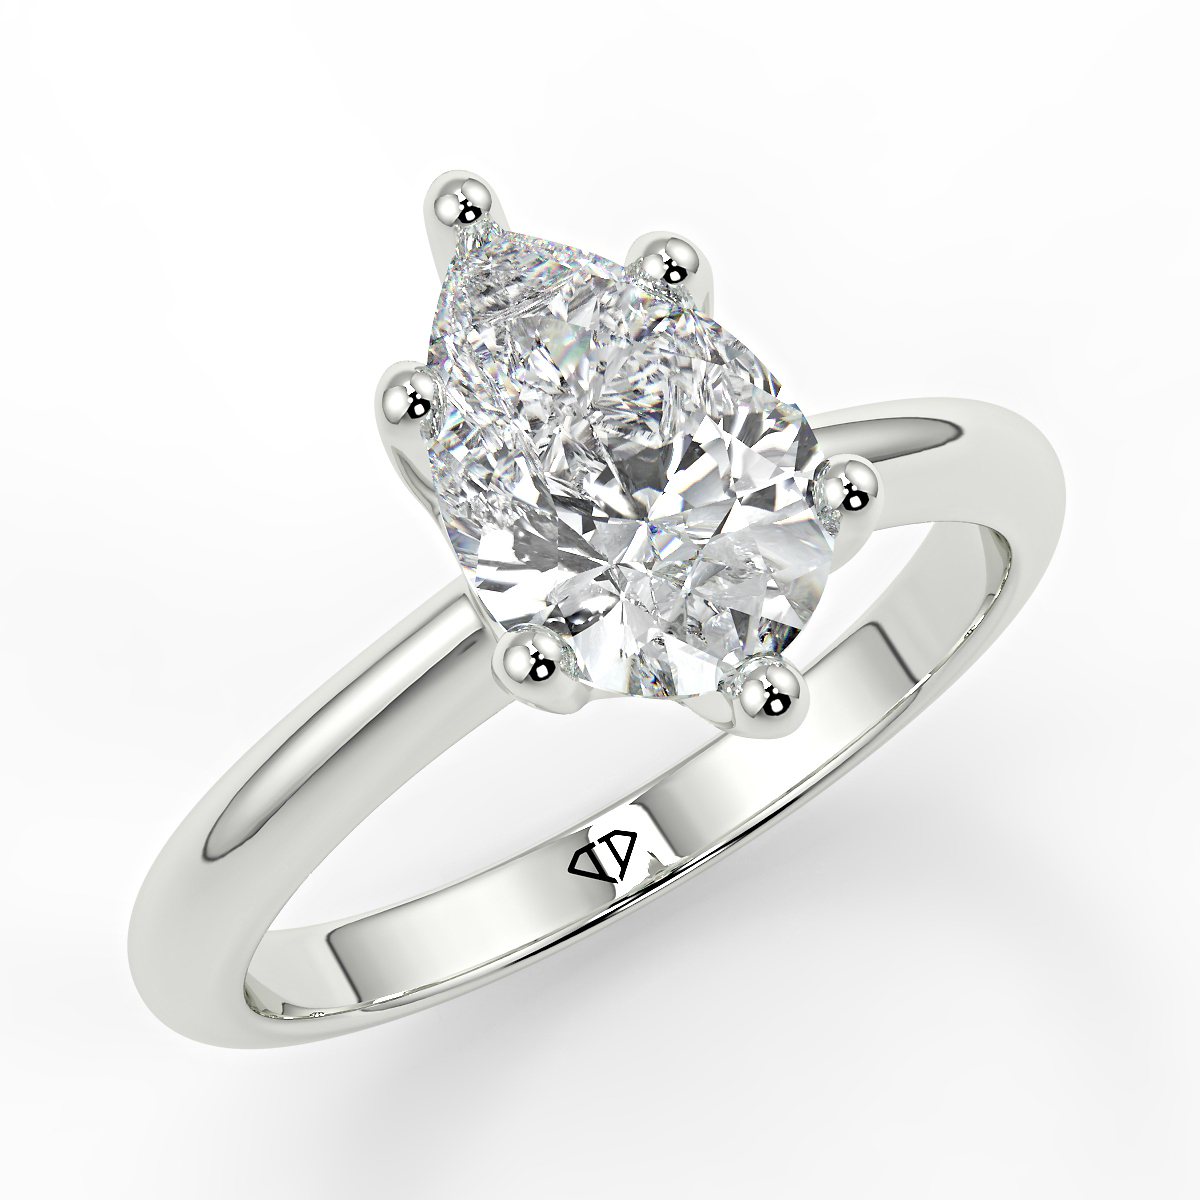 Unique Selection of Solitaire Diamond Engagement Rings for Women, Surat, Gujarat, India